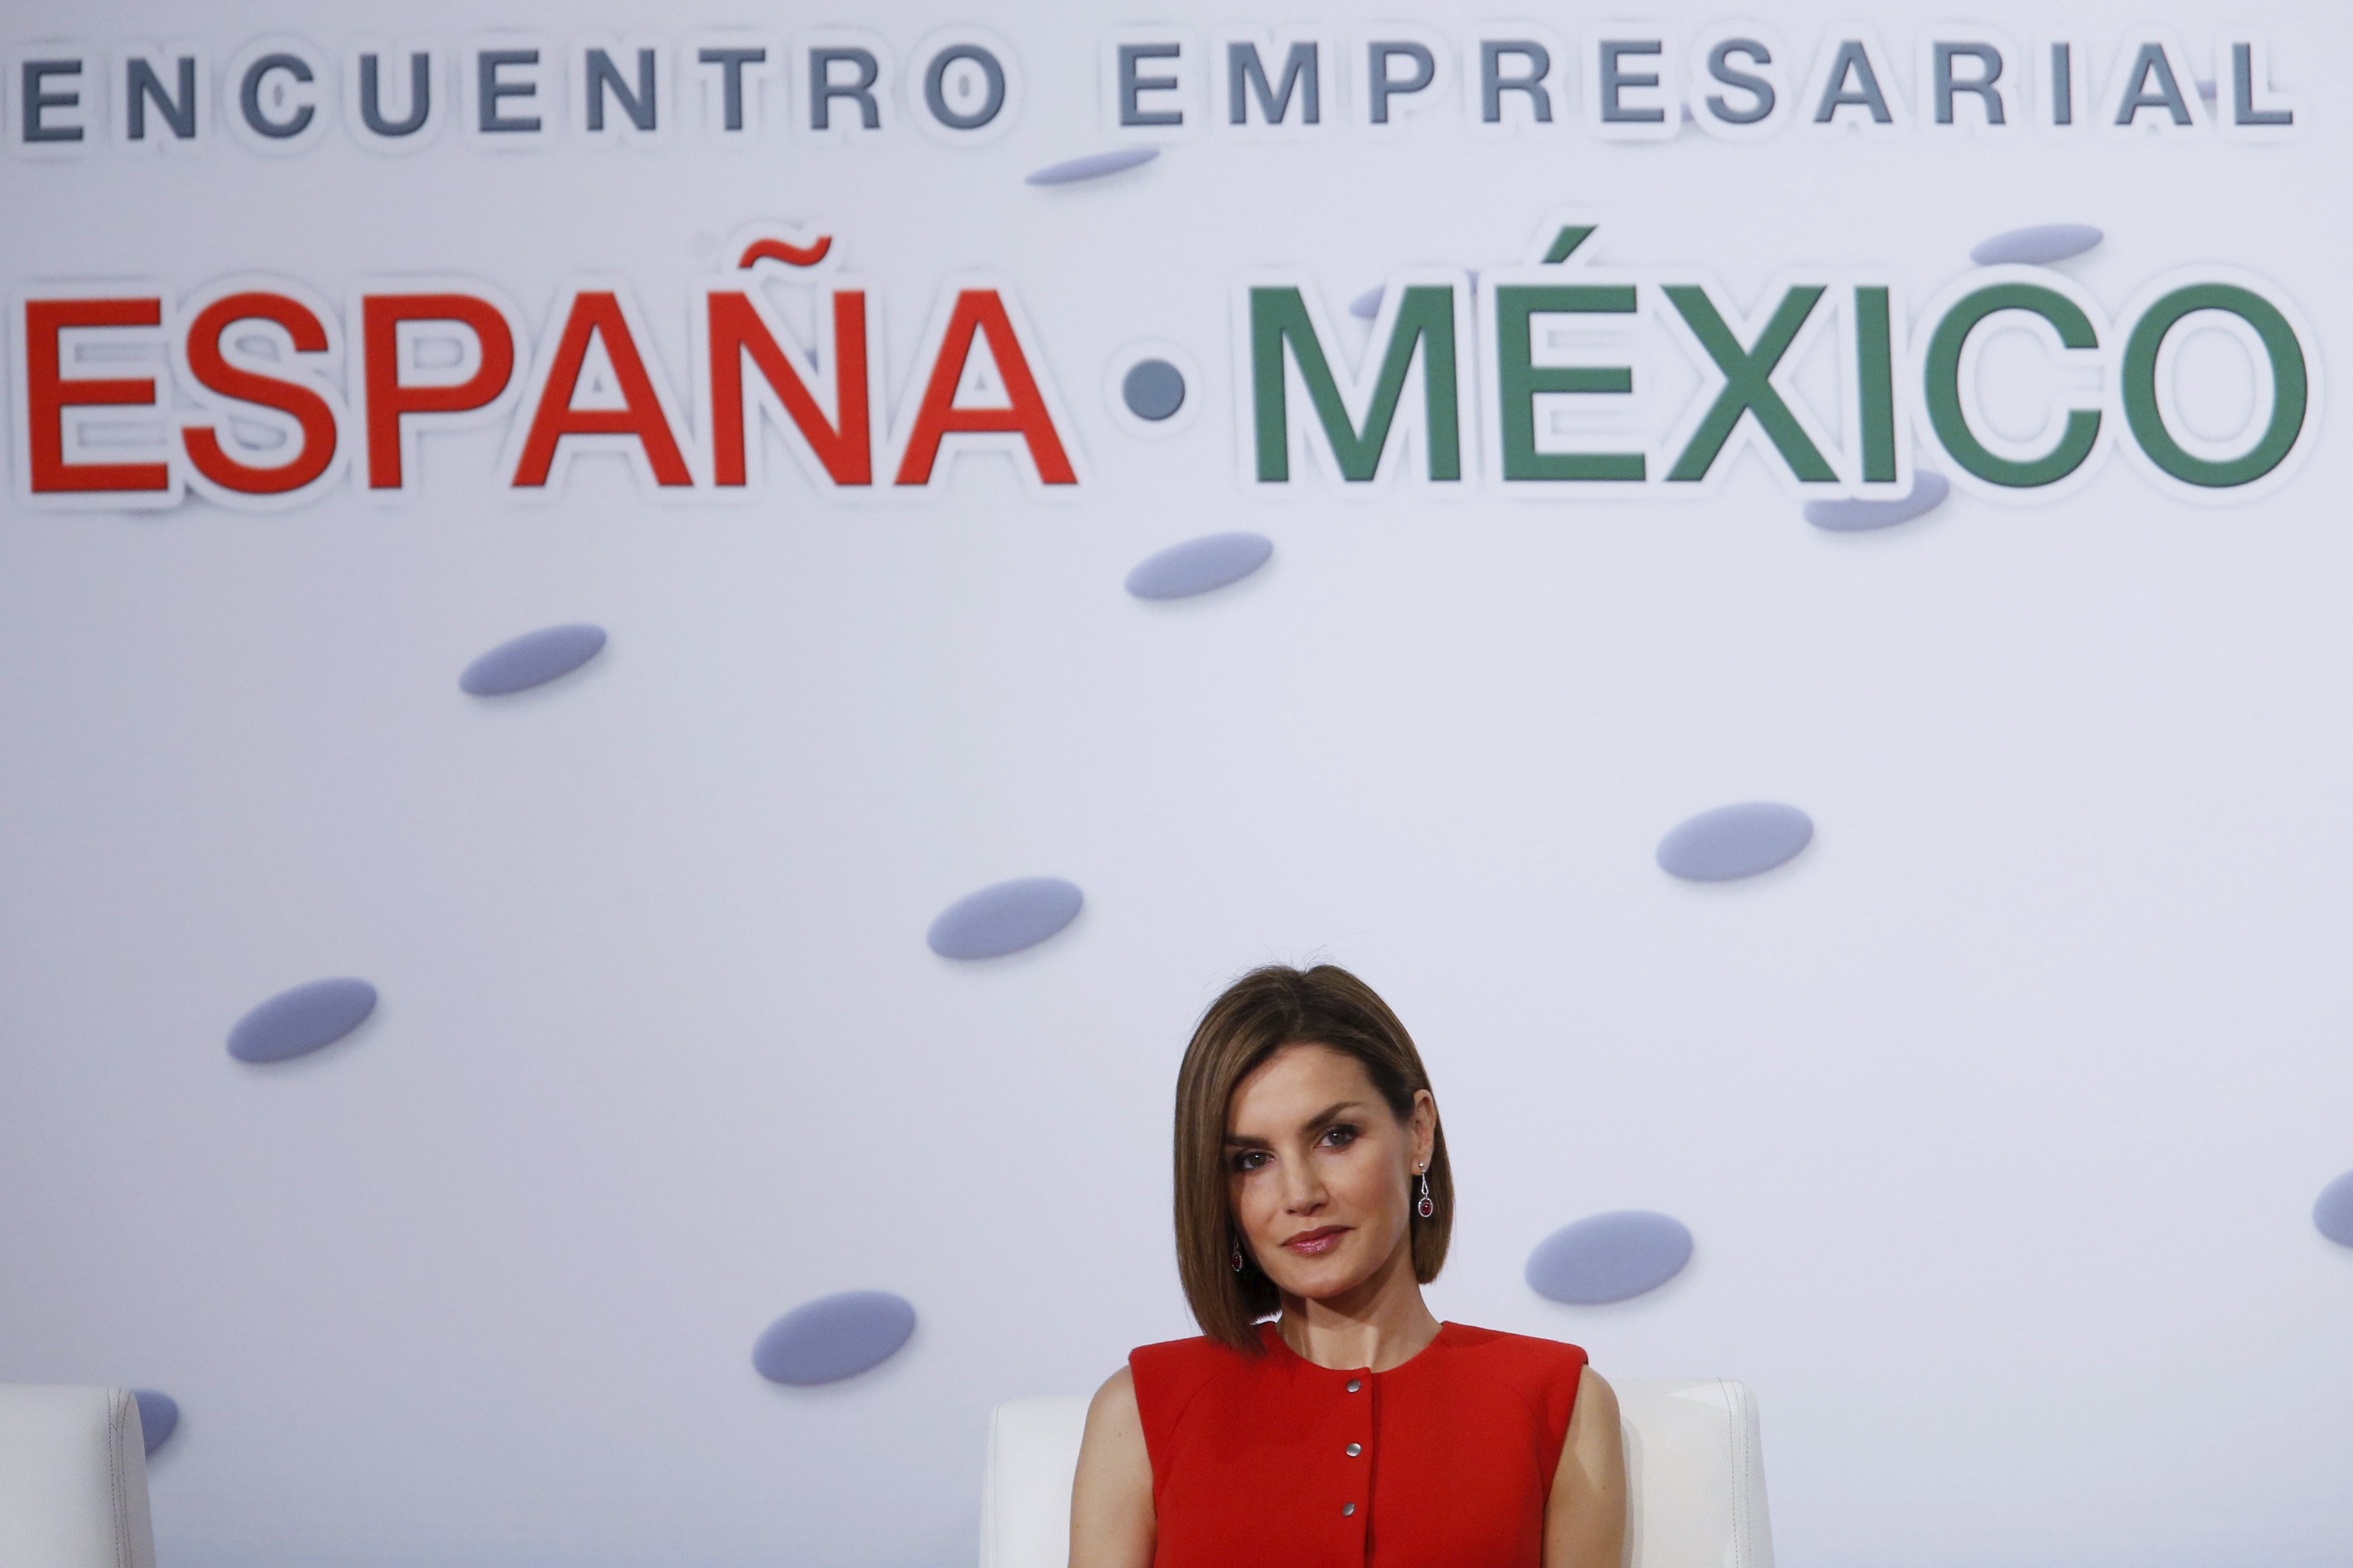 Spain's Queen Letizia takes part in the "Business Meeting Espana-Mexico" in Mexico City, Mexico, June 30, 2015. REUTERS/Edgard Garrido